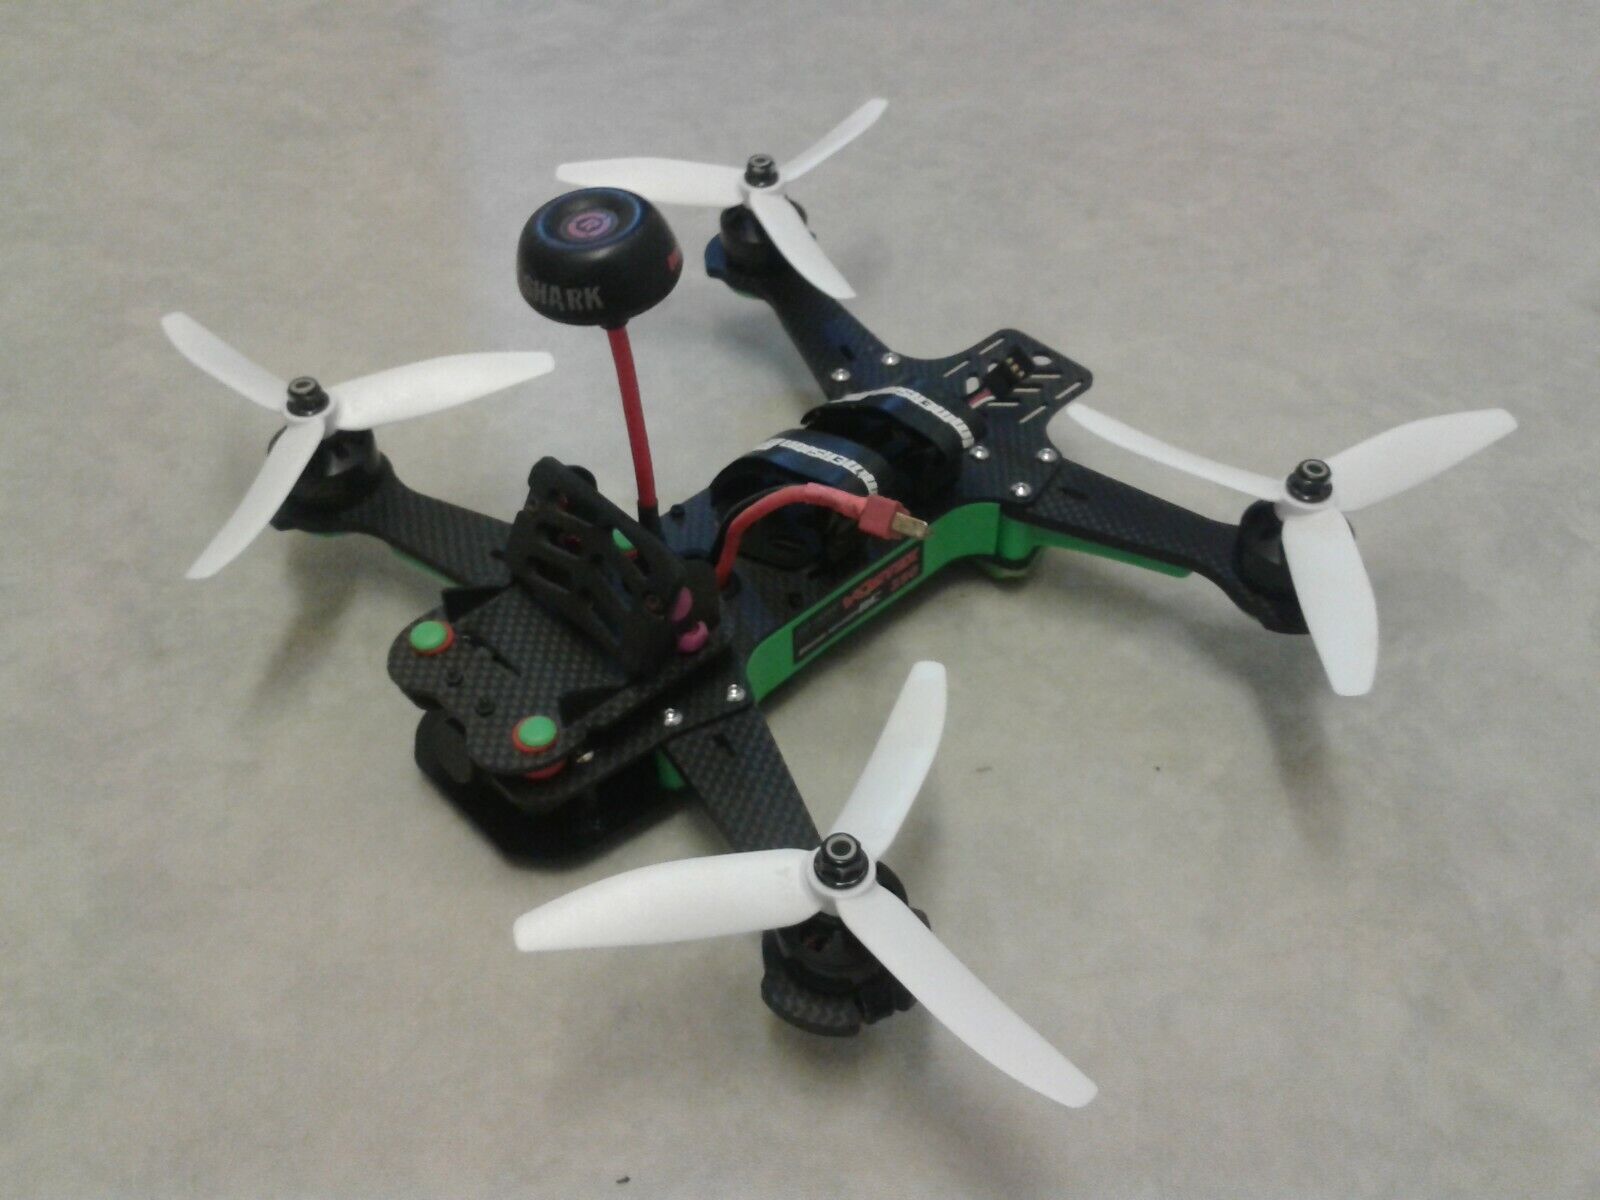 ImmersionRC Vortex 250 PRO Racing Drone